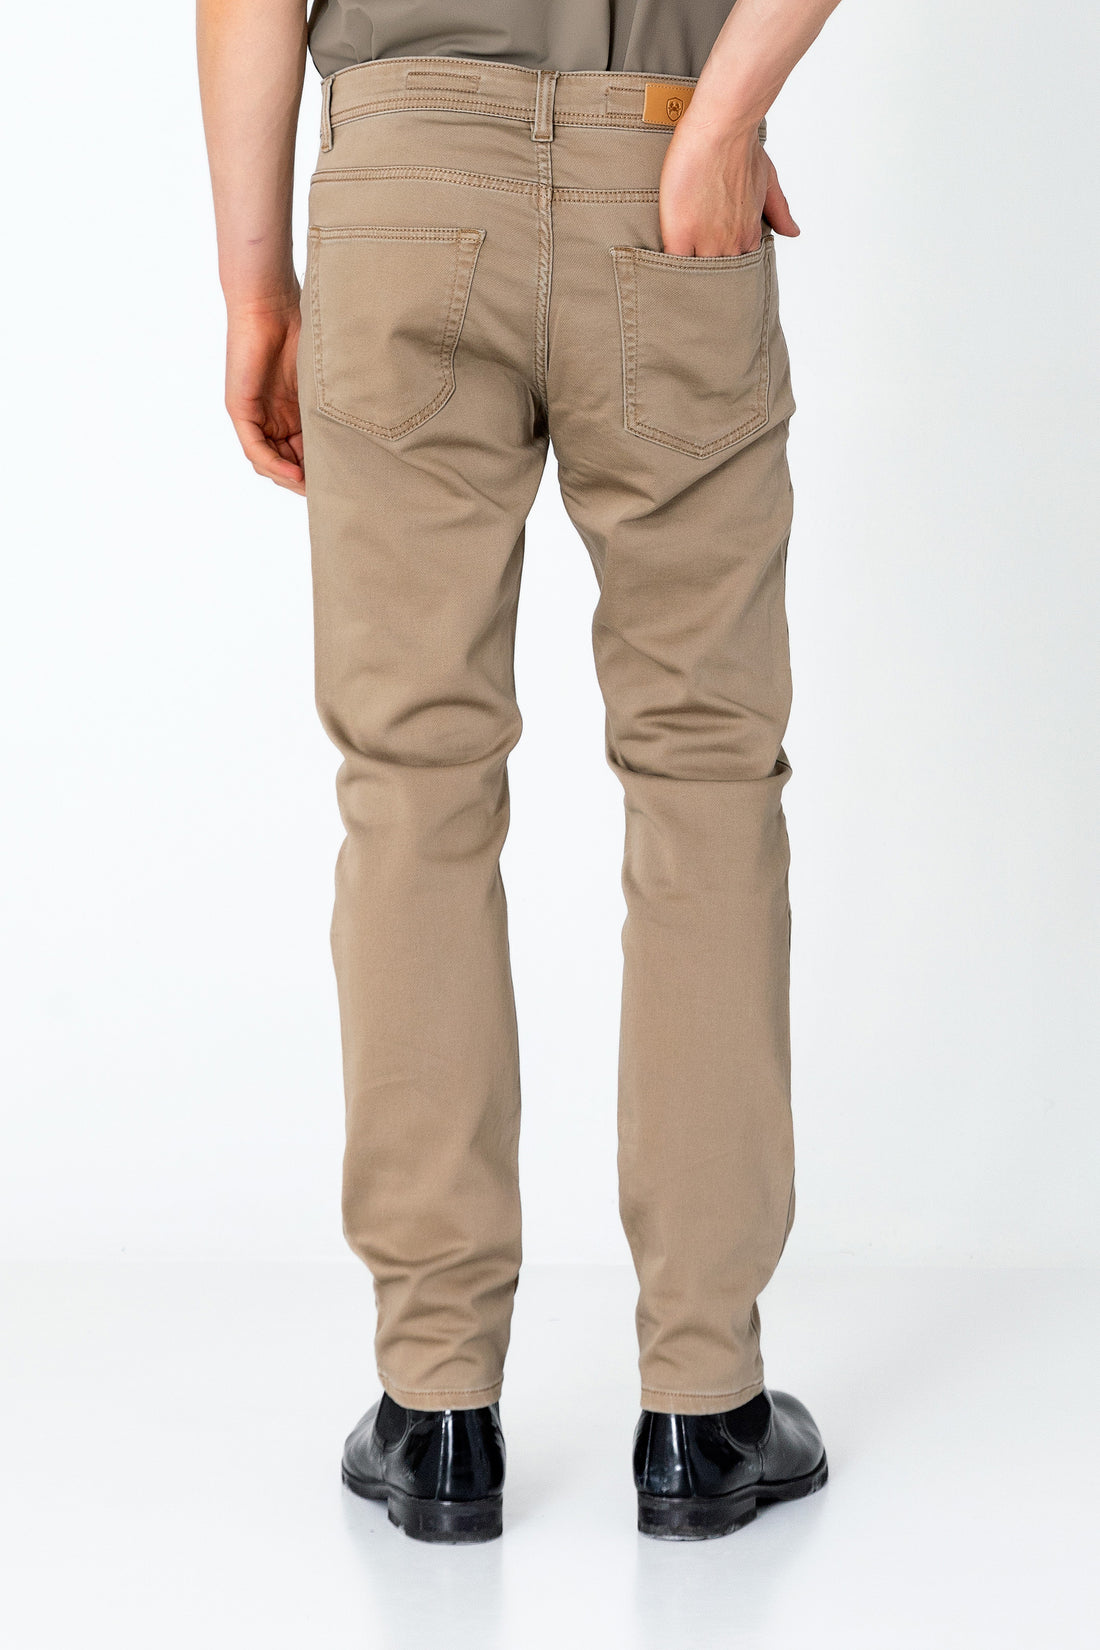 Super Soft 5-pocket Style Pants - Milk Brown